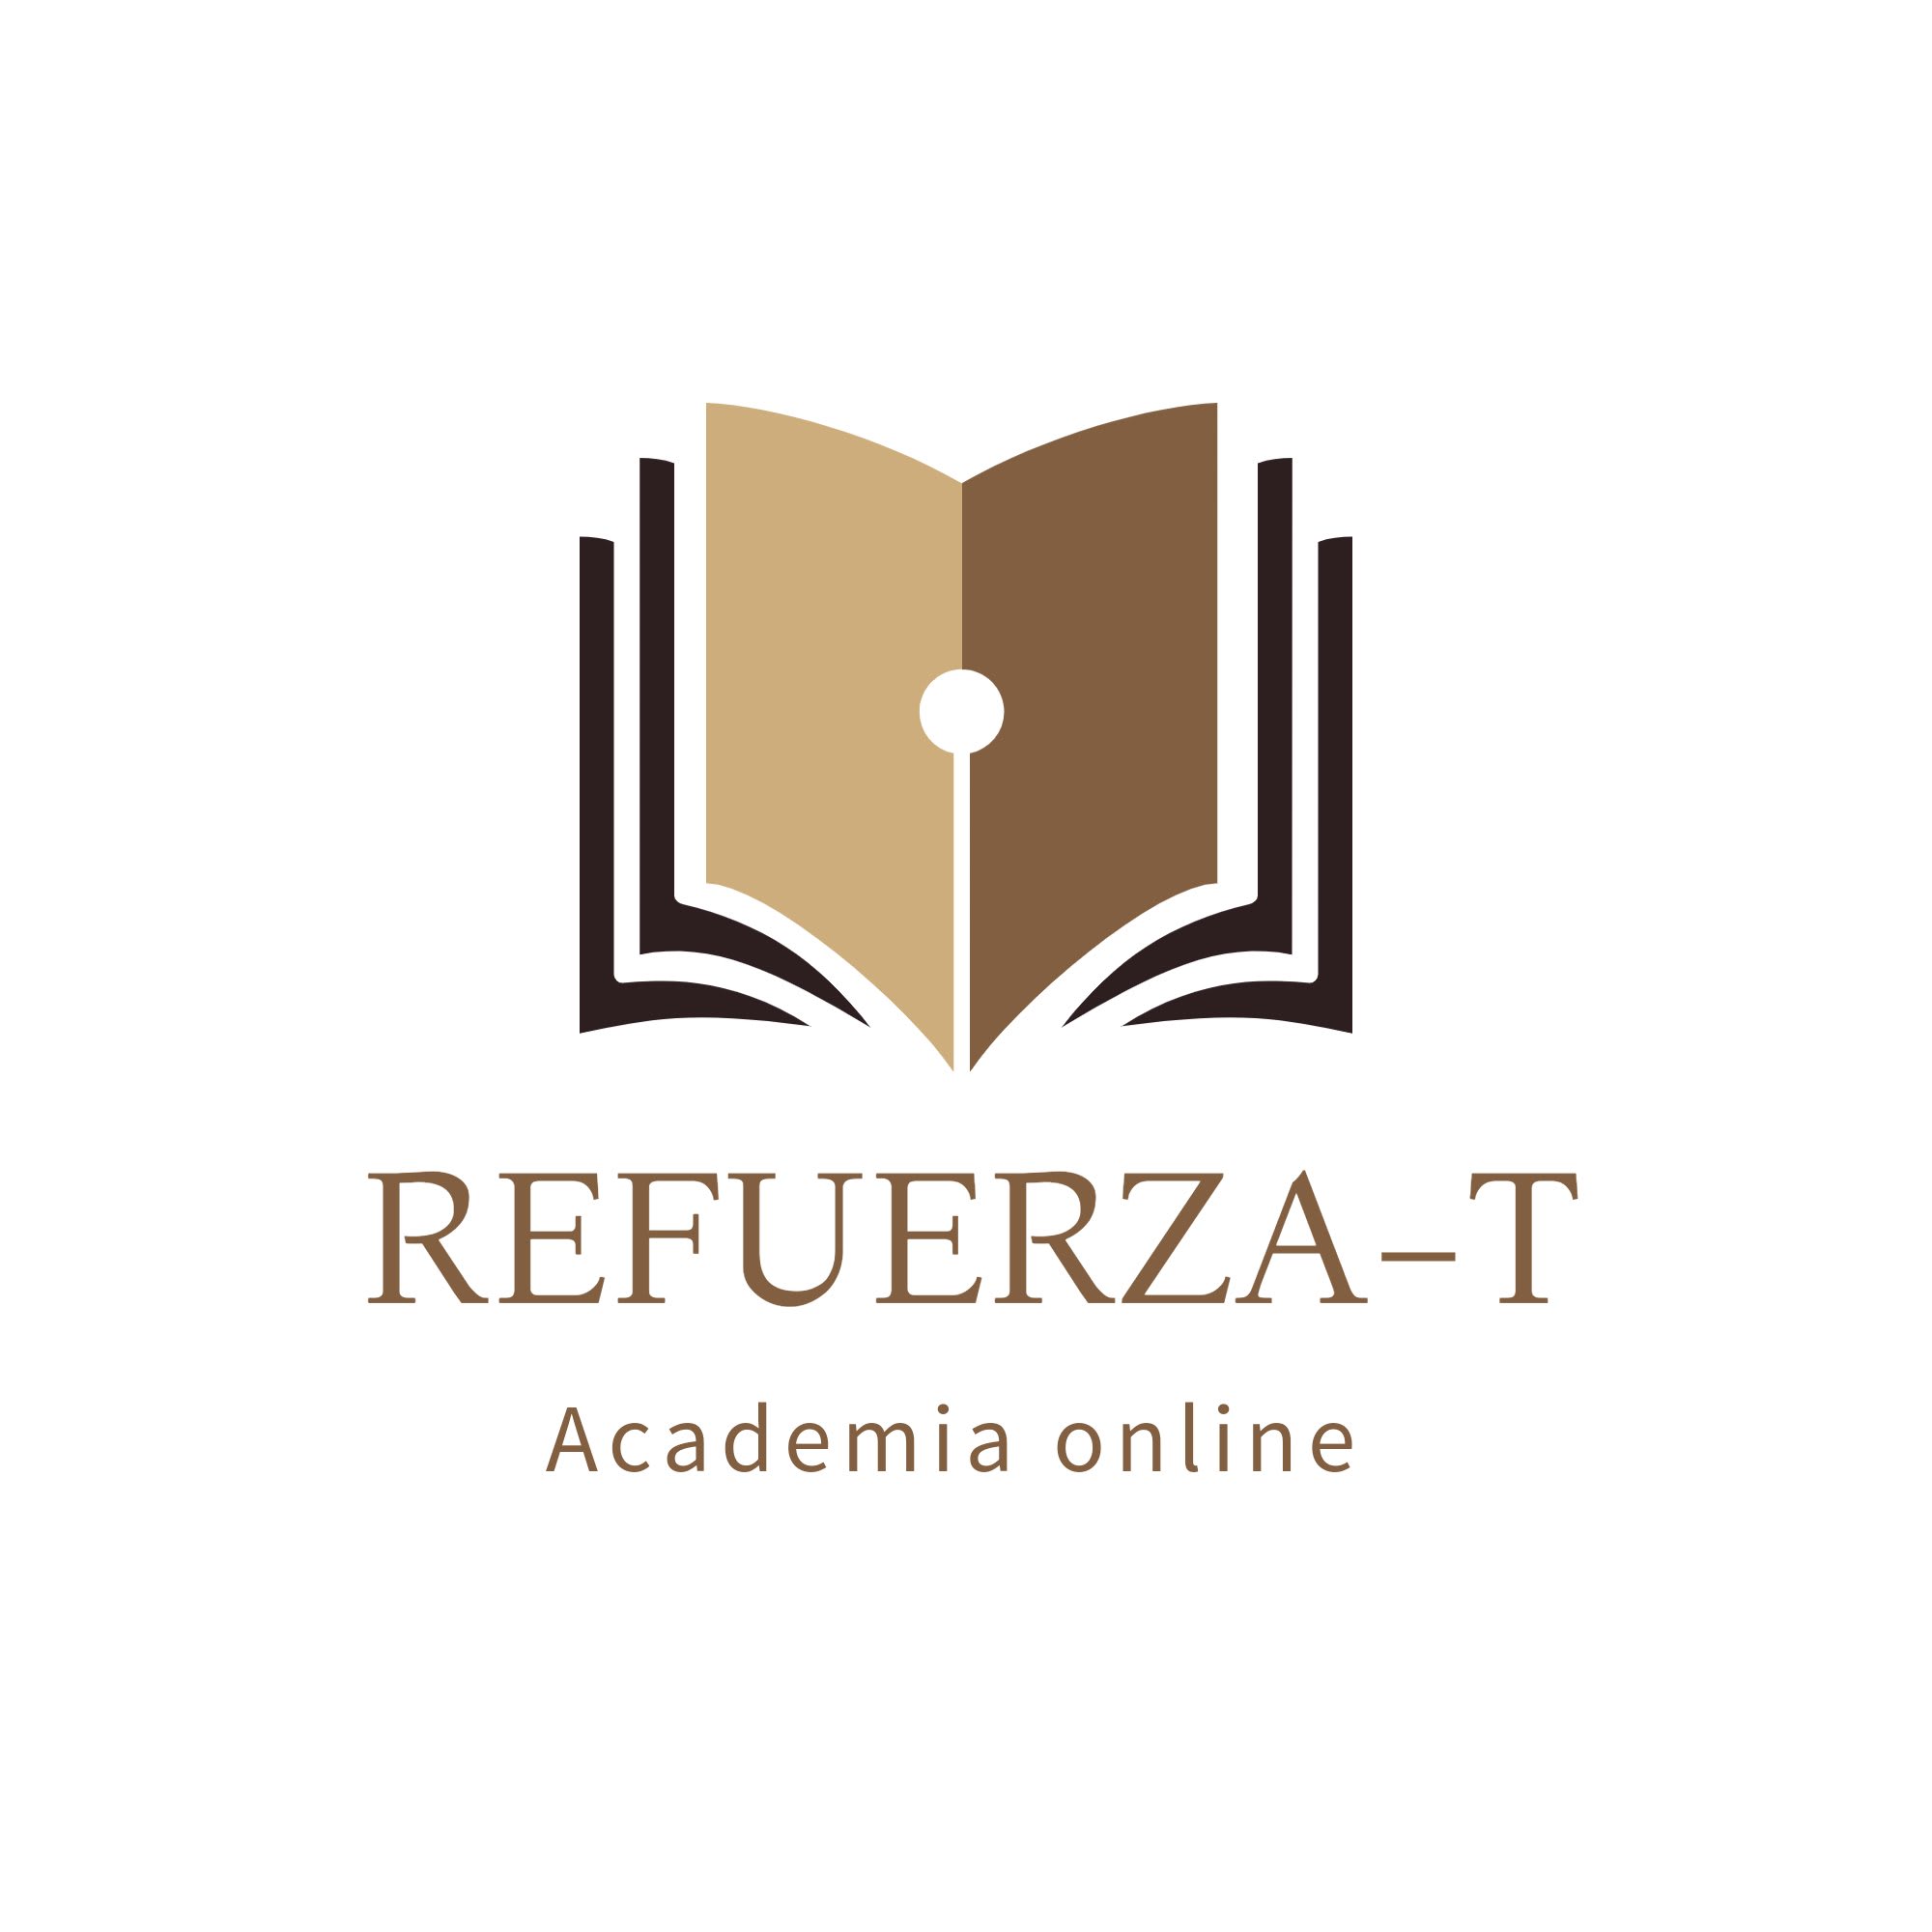 Refuerzate Academia Online